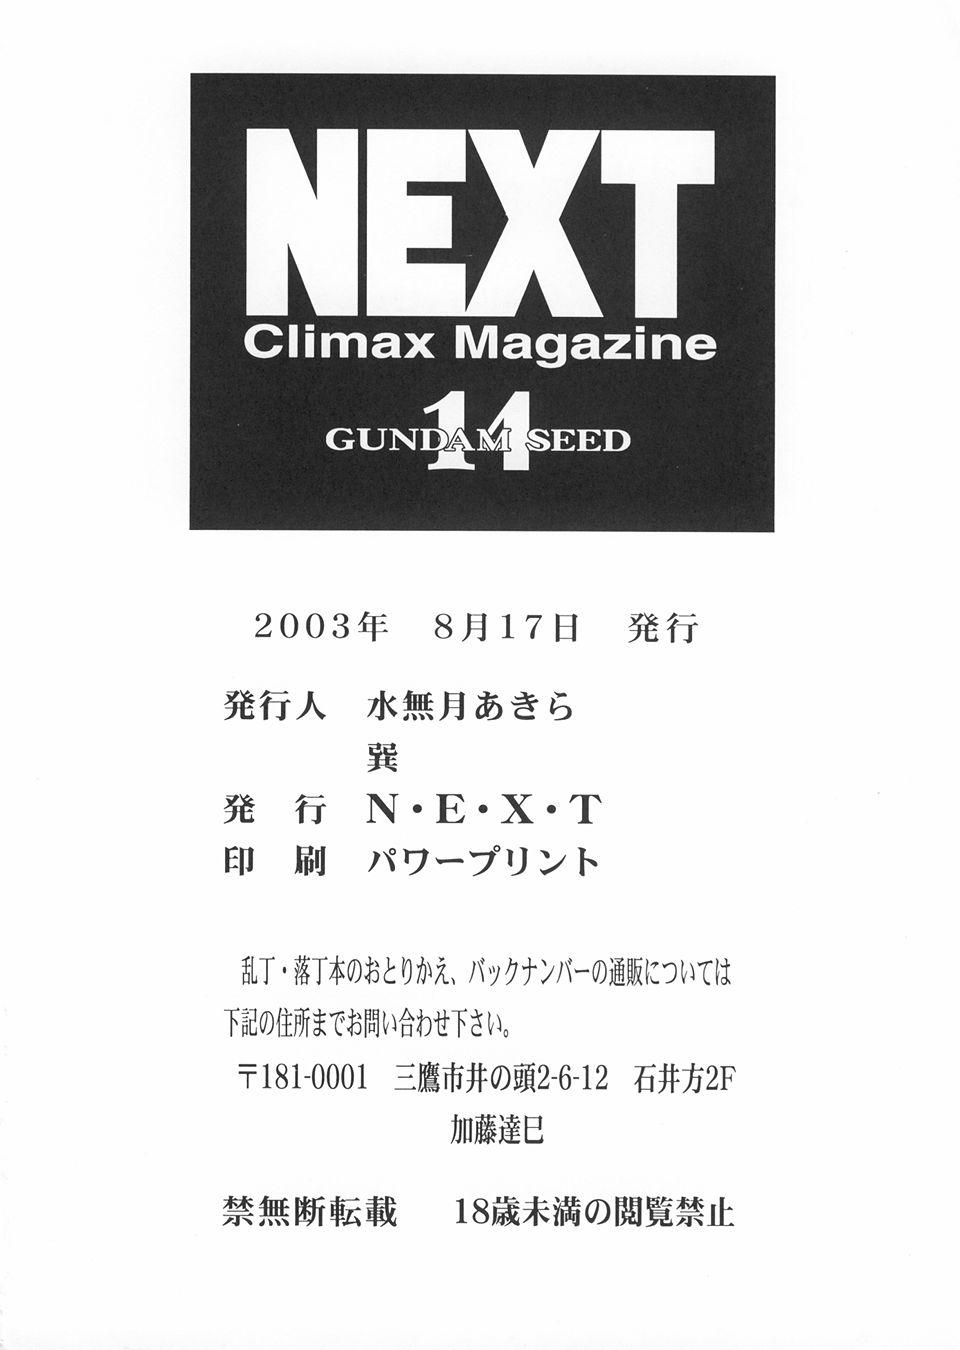 NEXT Climax Magazine 14 Gundam Seed Tokushuu-gou 76